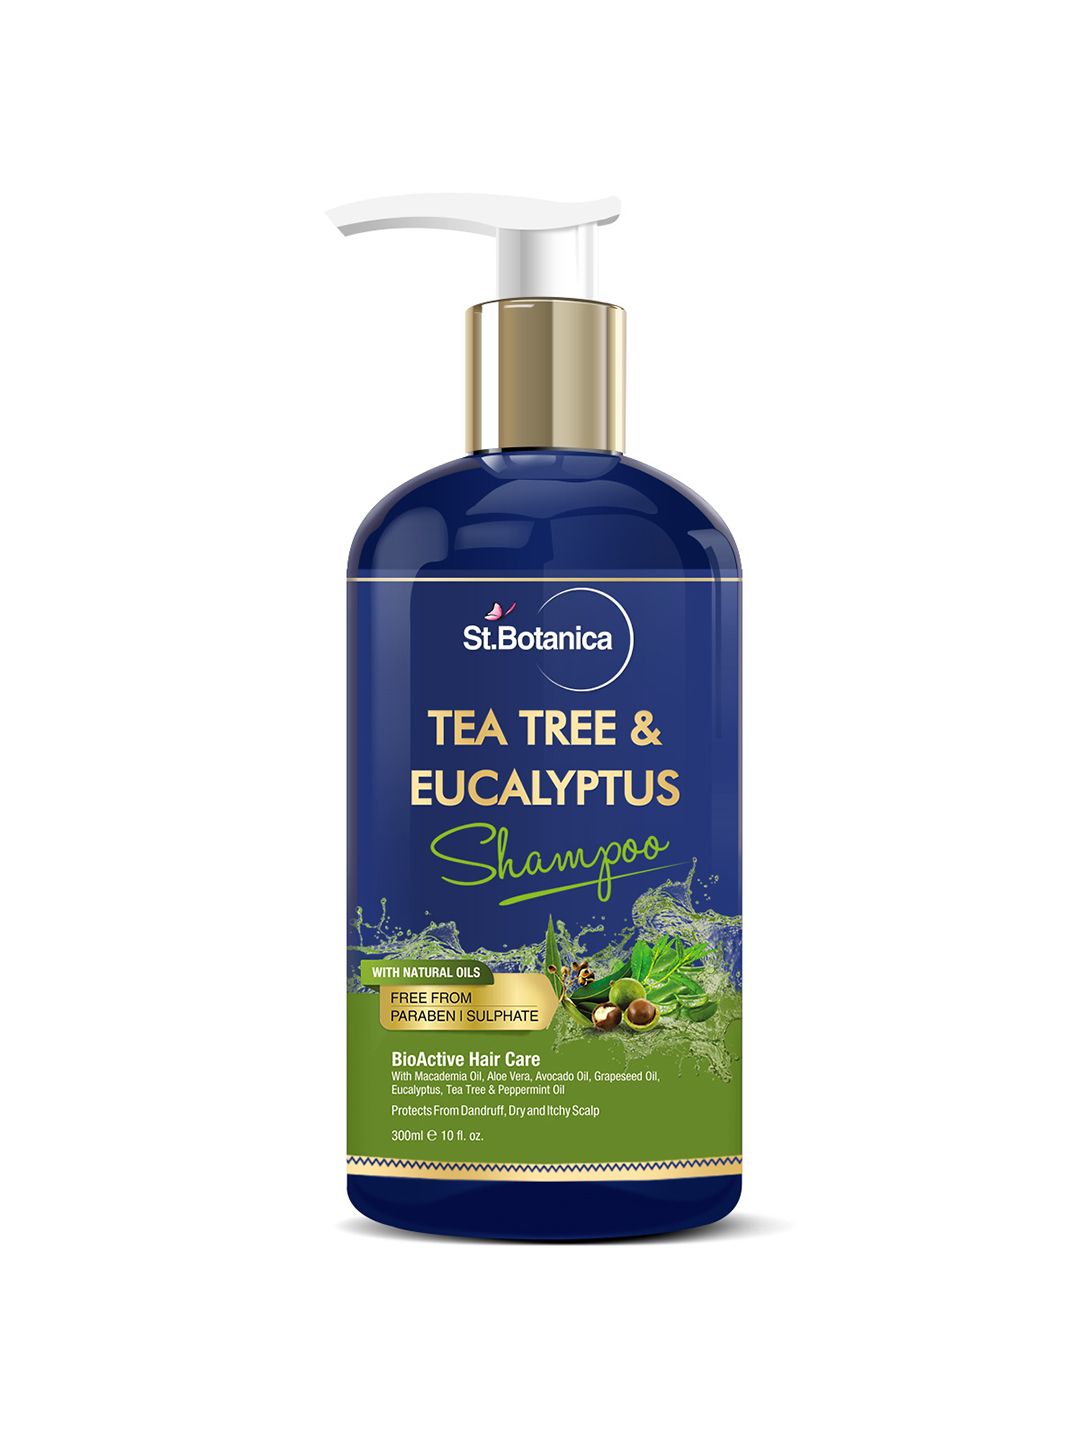 St.Botanica Eucalyptus & Tea-Tree Invigorating Shampoo, 300ml Price in India